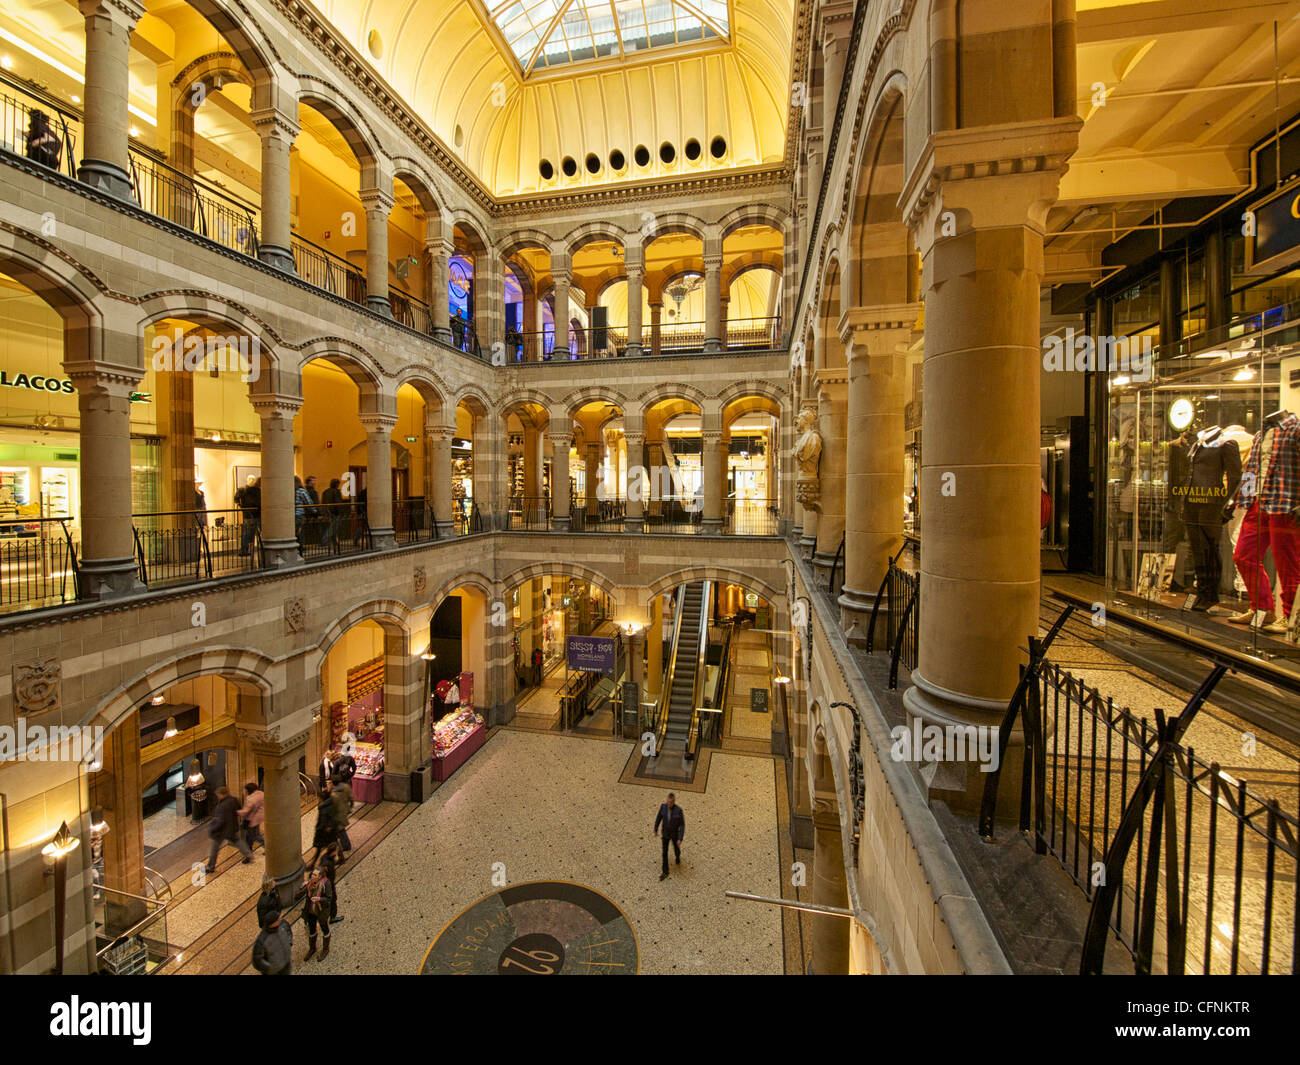 Barcelona Vervloekt Midden Interior of the Magna Plaza luxury shopping center in Amsterdam, the  Netherlands Stock Photo - Alamy